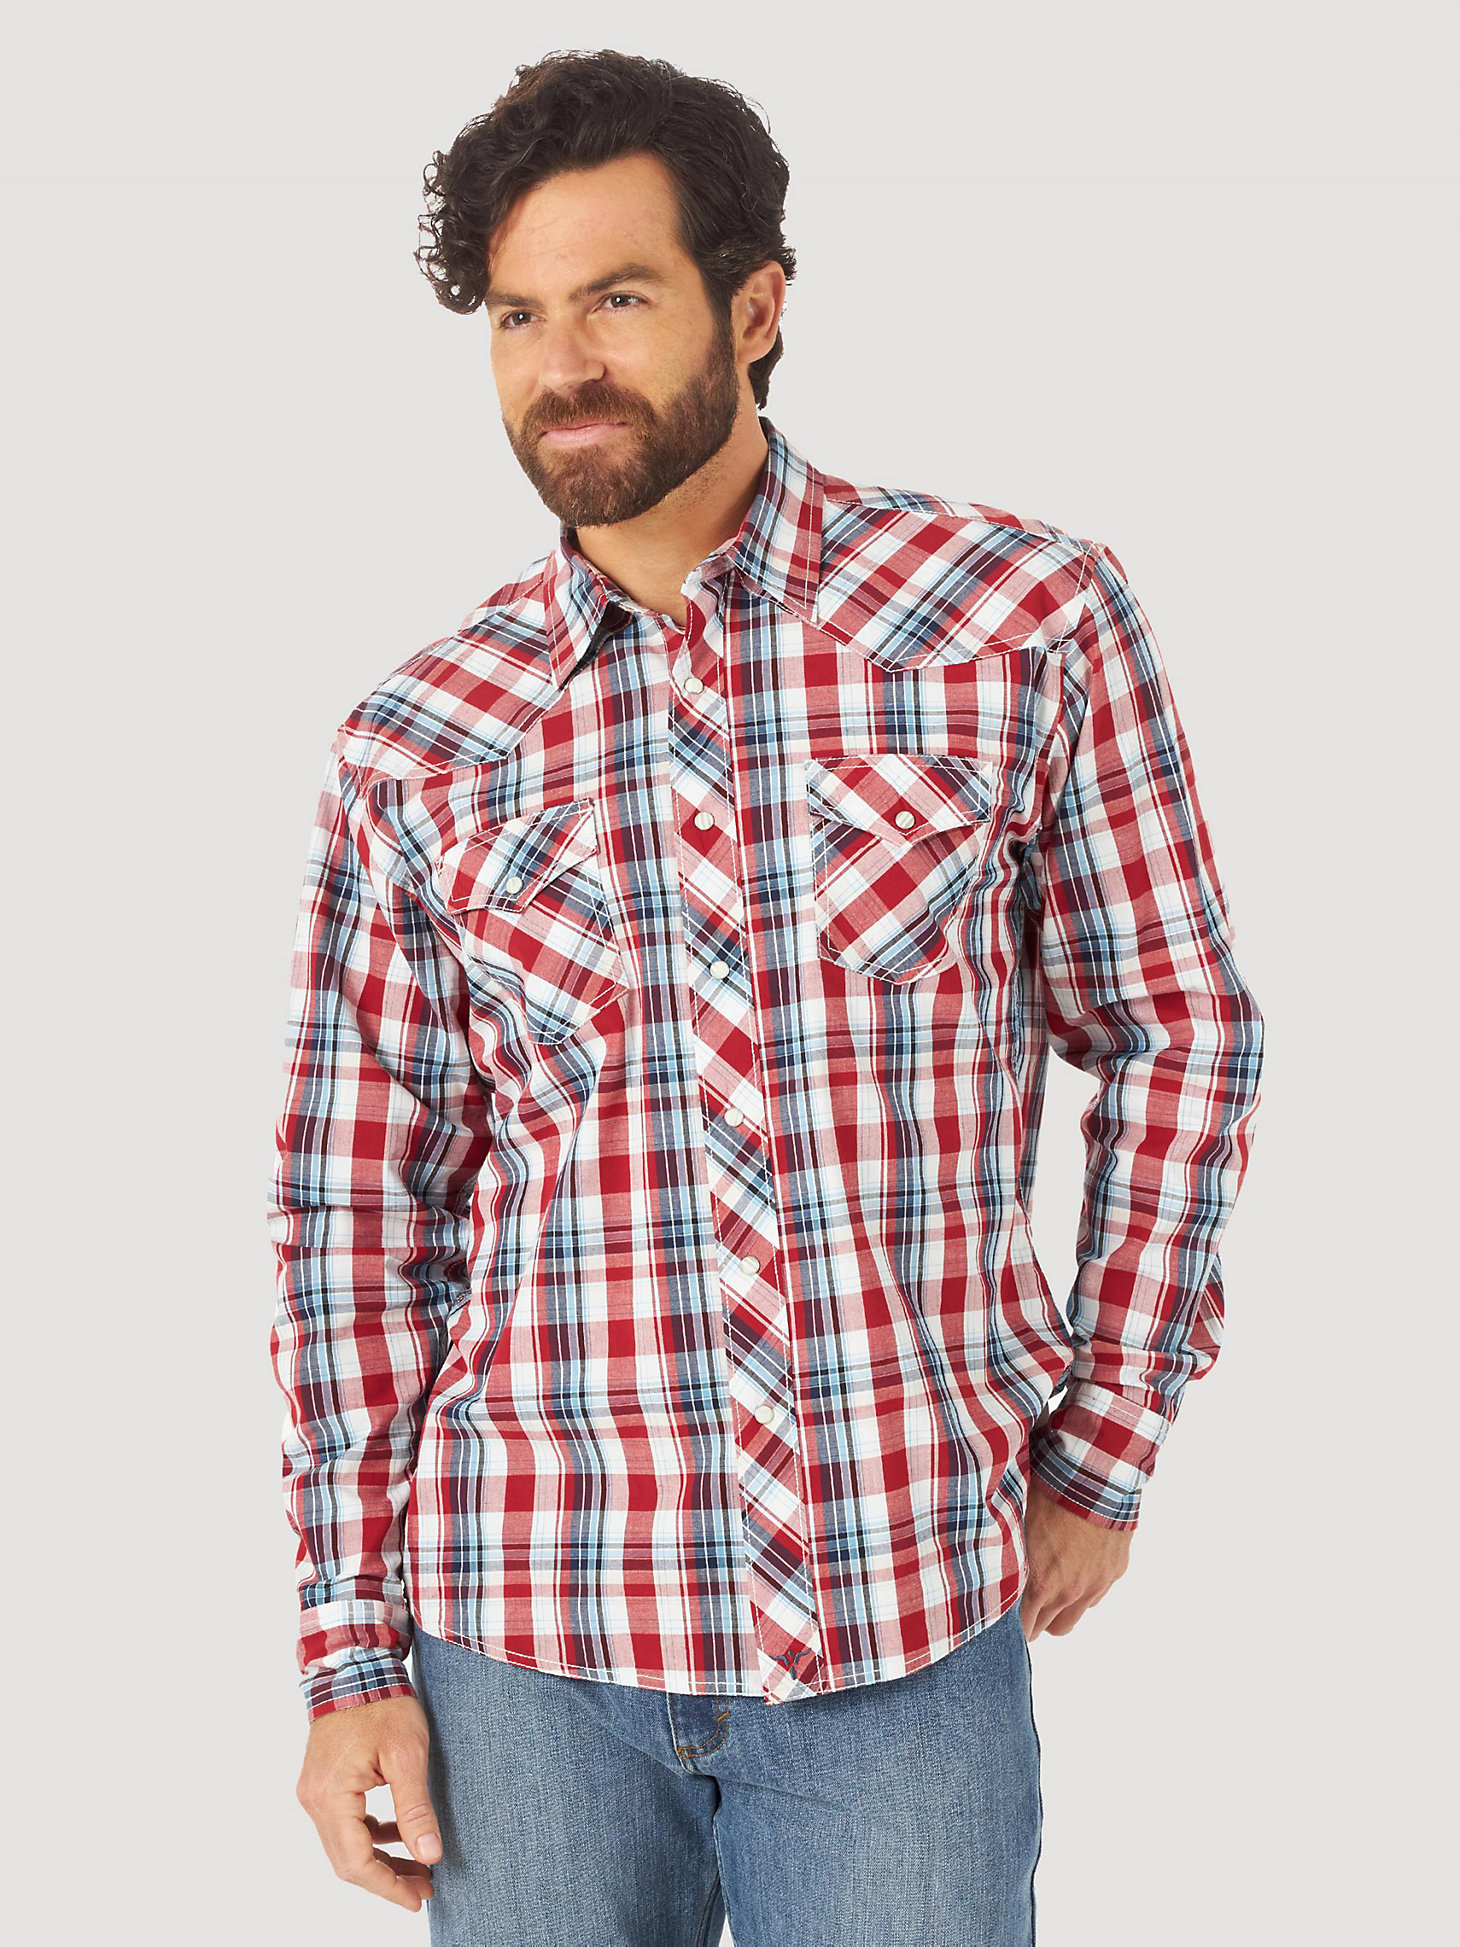 Checkered Long Sleeve Shirt Plaid Retro Country Casual Blouse Collar Top Cotton